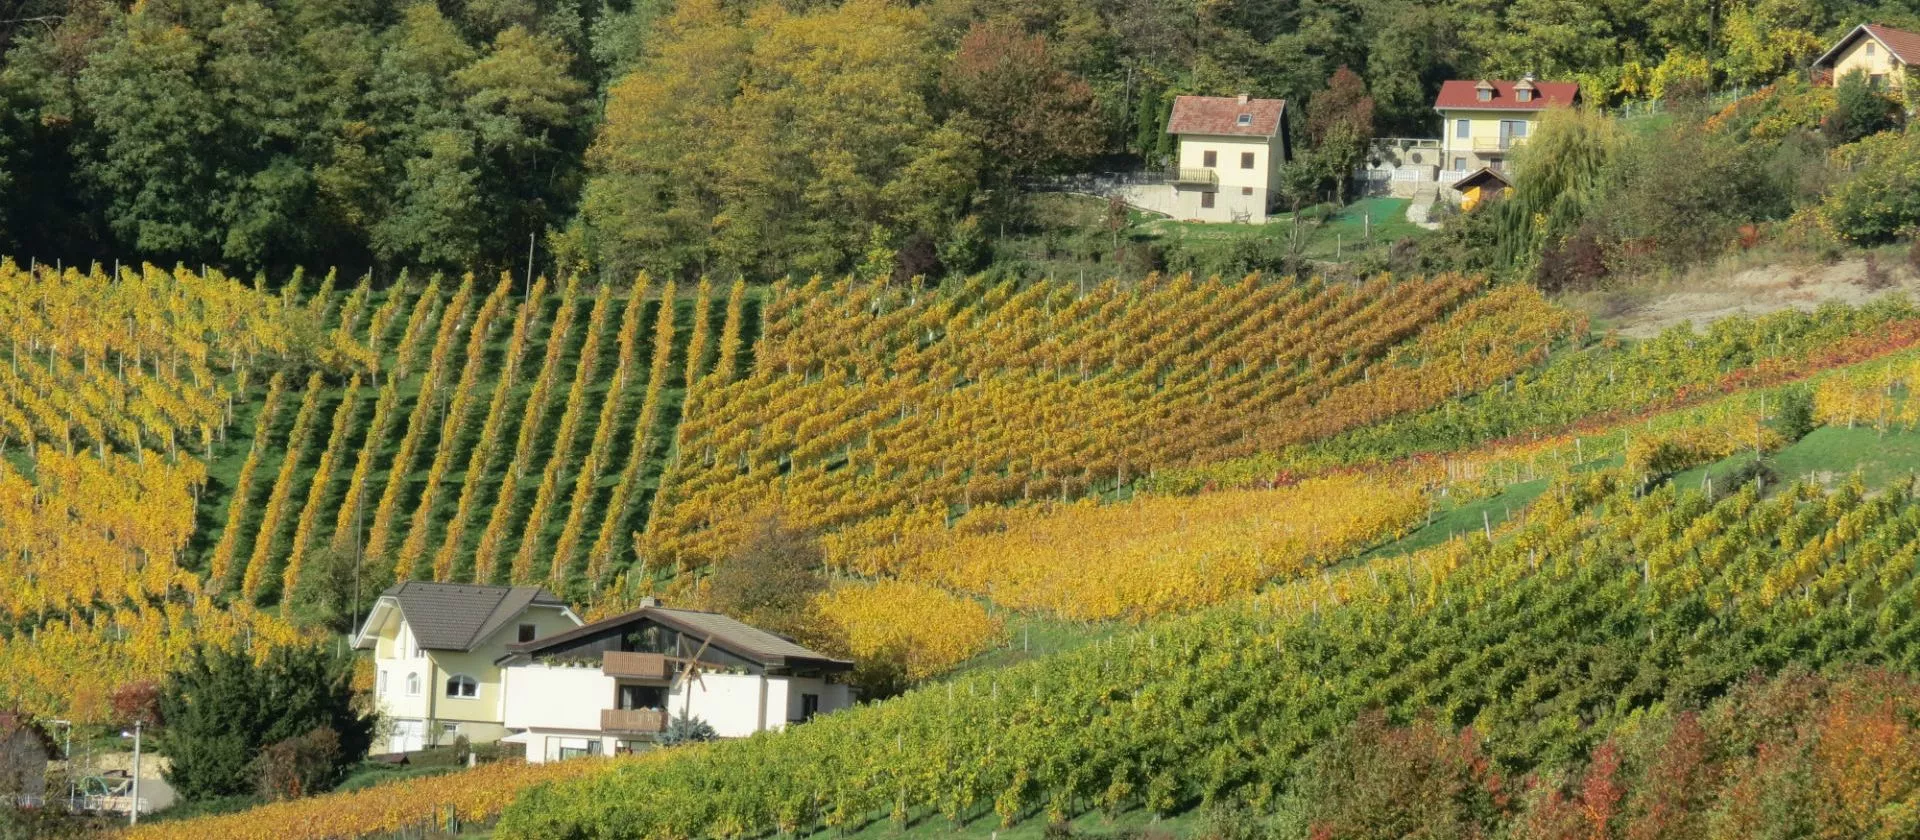 Vinogradi Horvat in Slovenia, Europe | Wineries - Rated 0.9